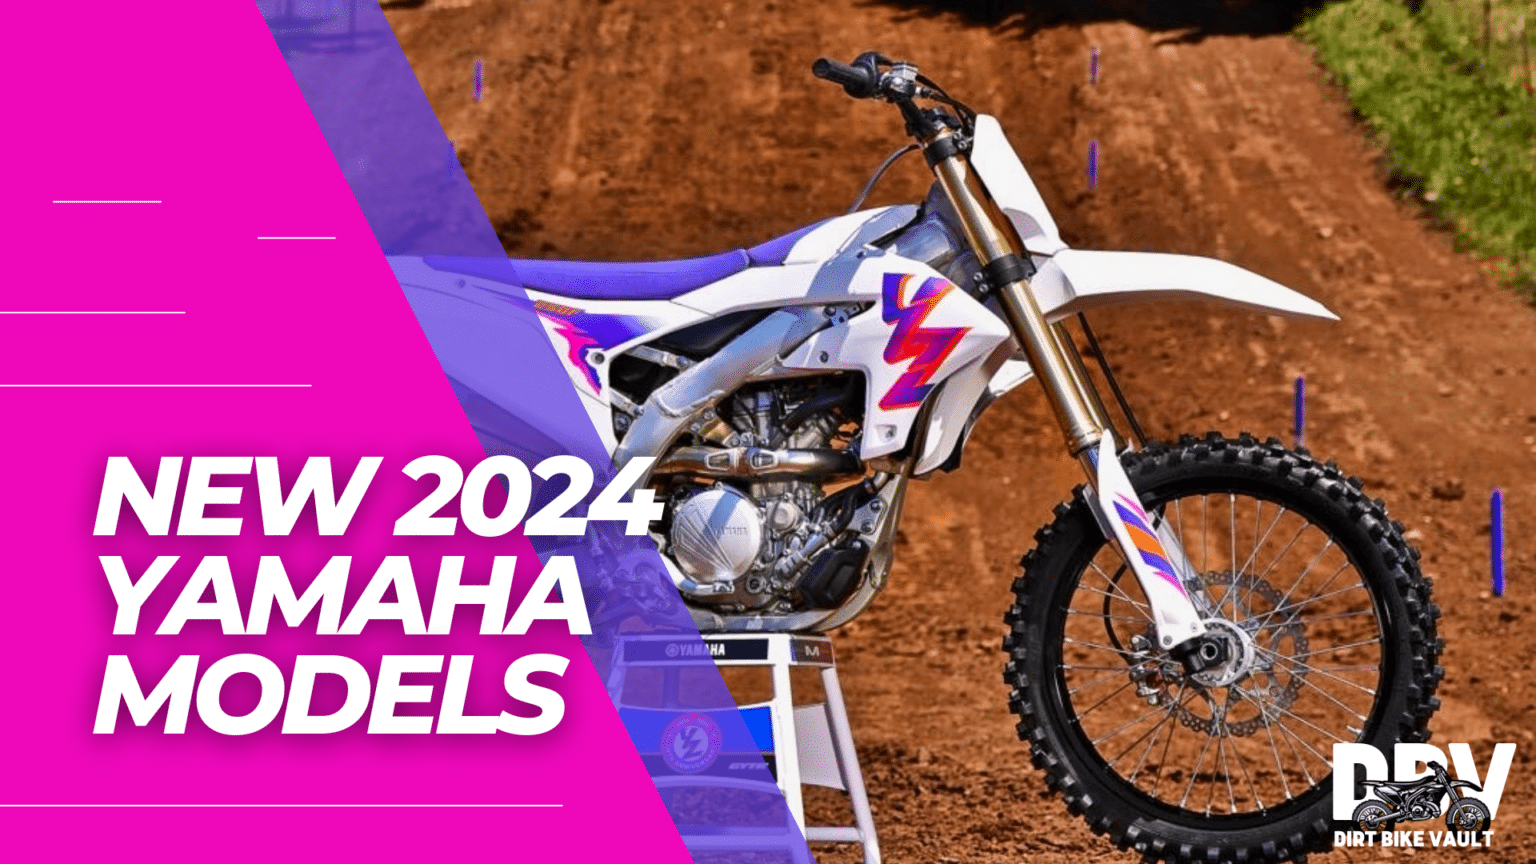 New 2024 Yamaha Dirt Bikes Dirt Bike Vault